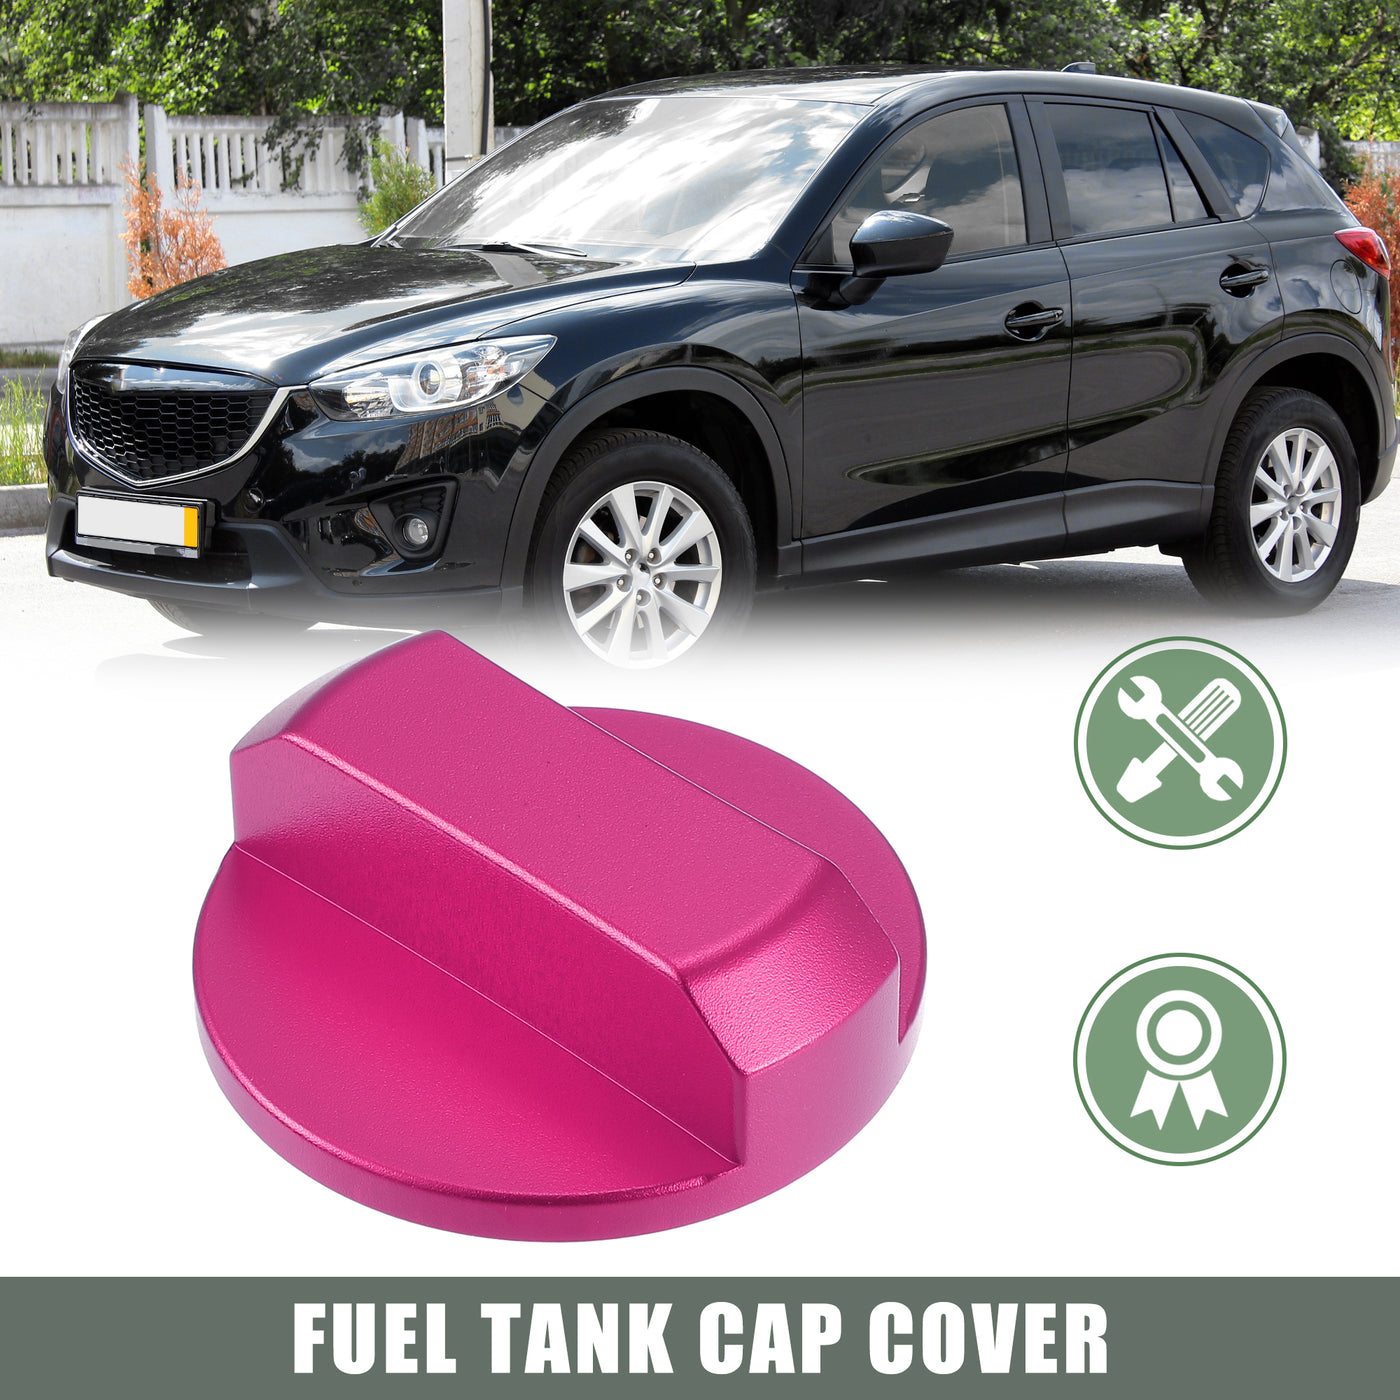 X AUTOHAUX Fuel Tank Cap Cover Gas Fuel Cap Tank Filler Cover for Mazda CX-5 CX-8 CX-3 Pink